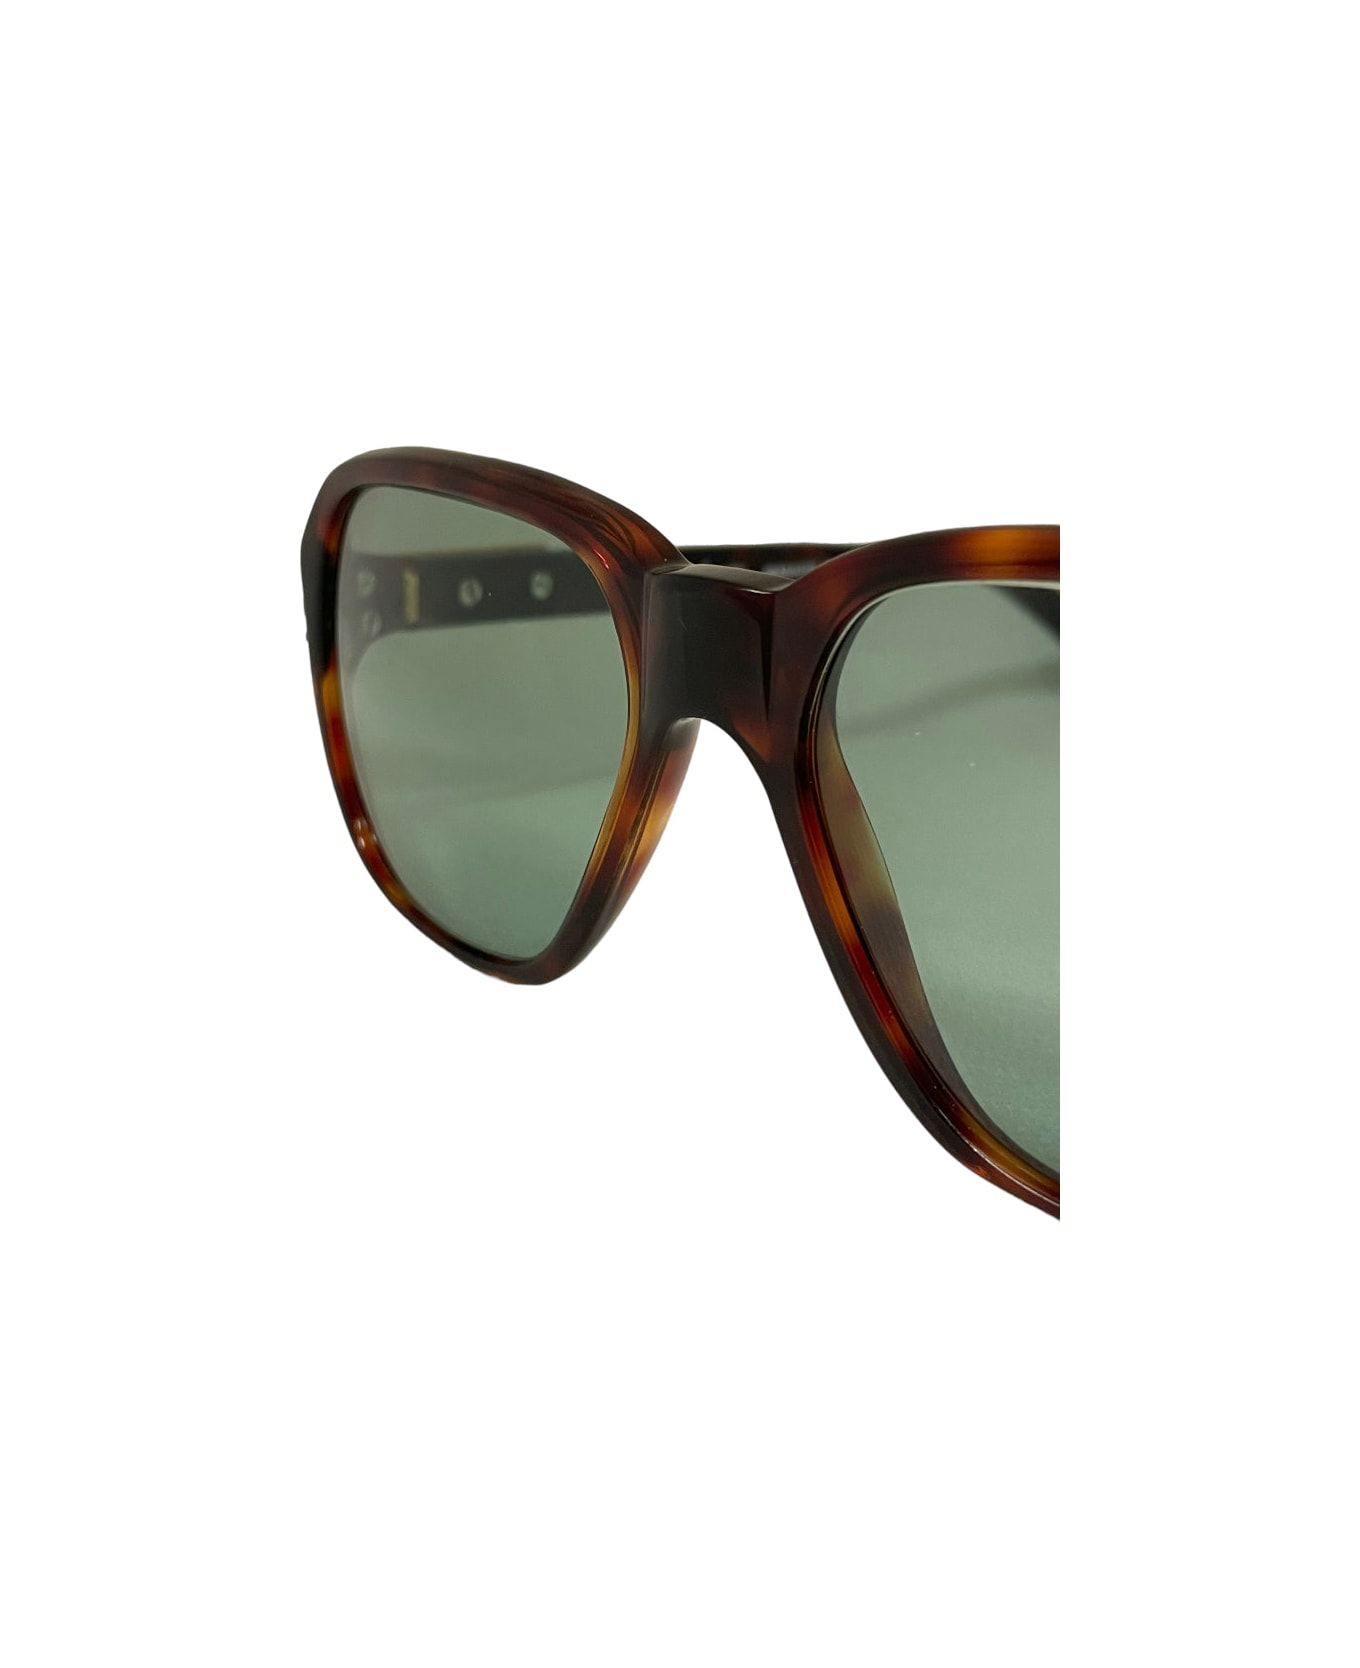 Persol Manager - Havana Sunglasses